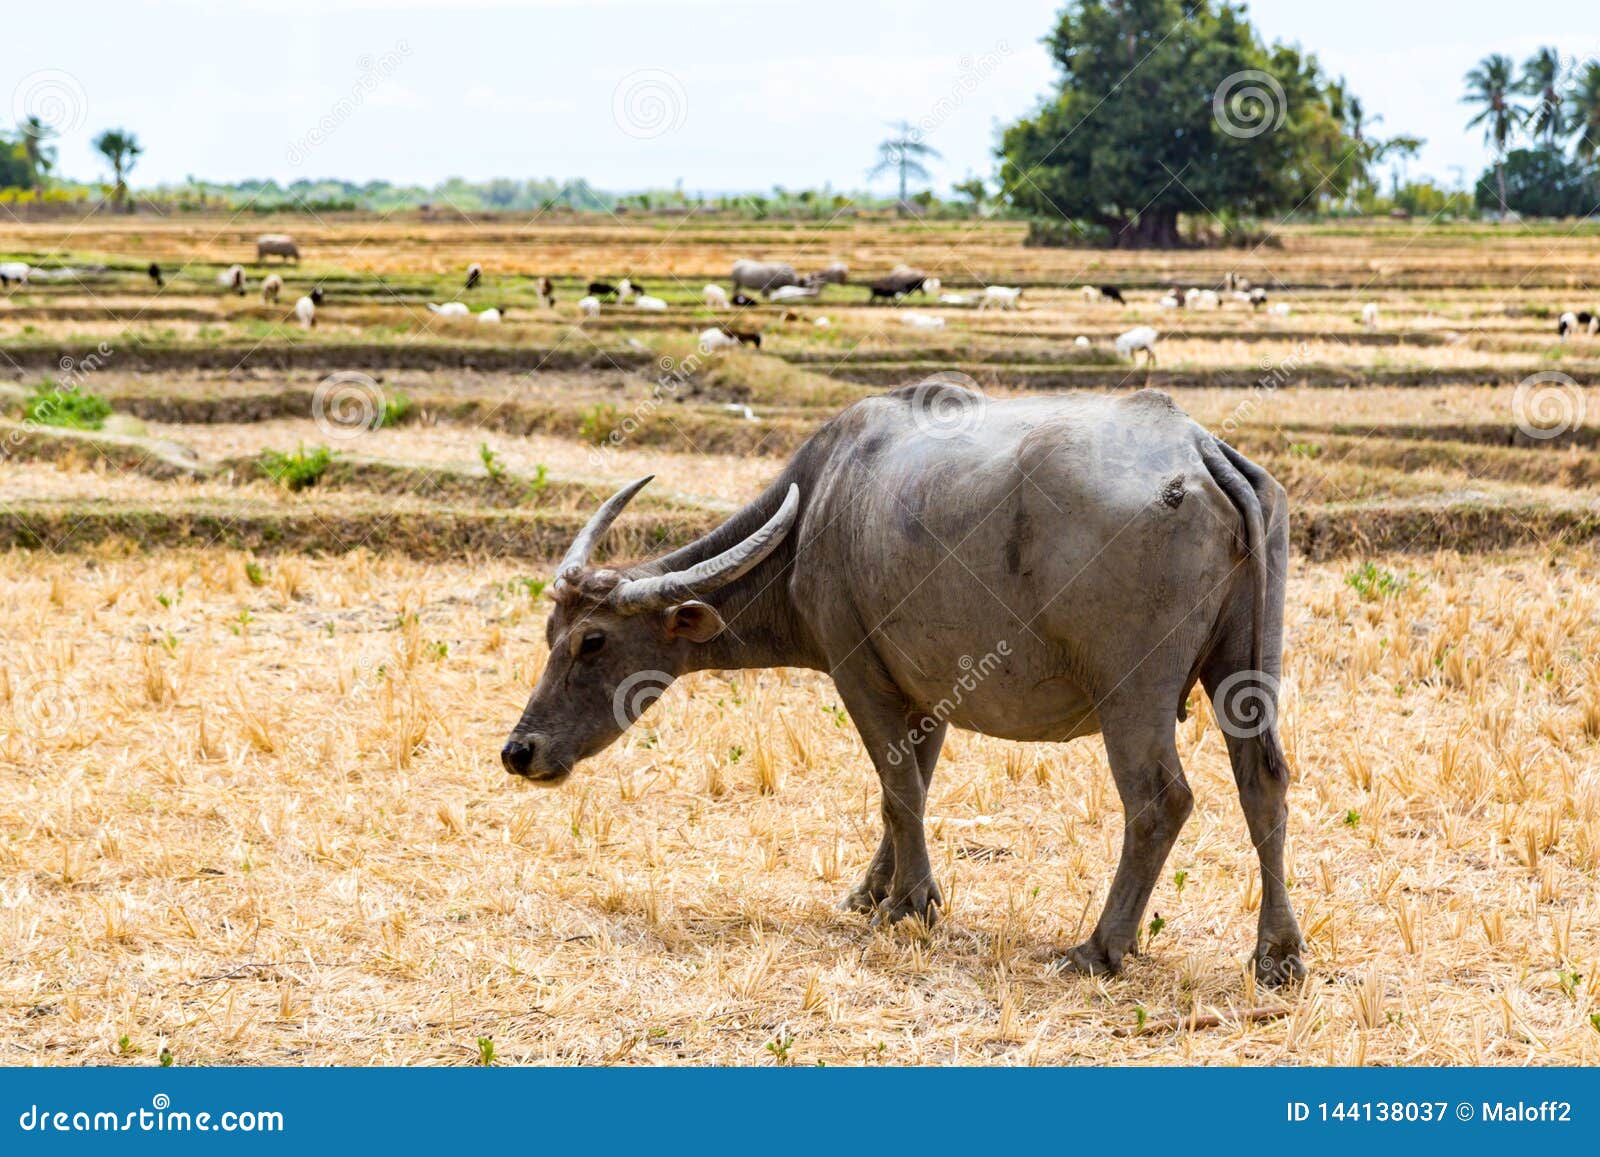 animal stock in southeast asia. zebu, buffalo or cow. cattle on a field. village life in rural east timor - timor-leste.